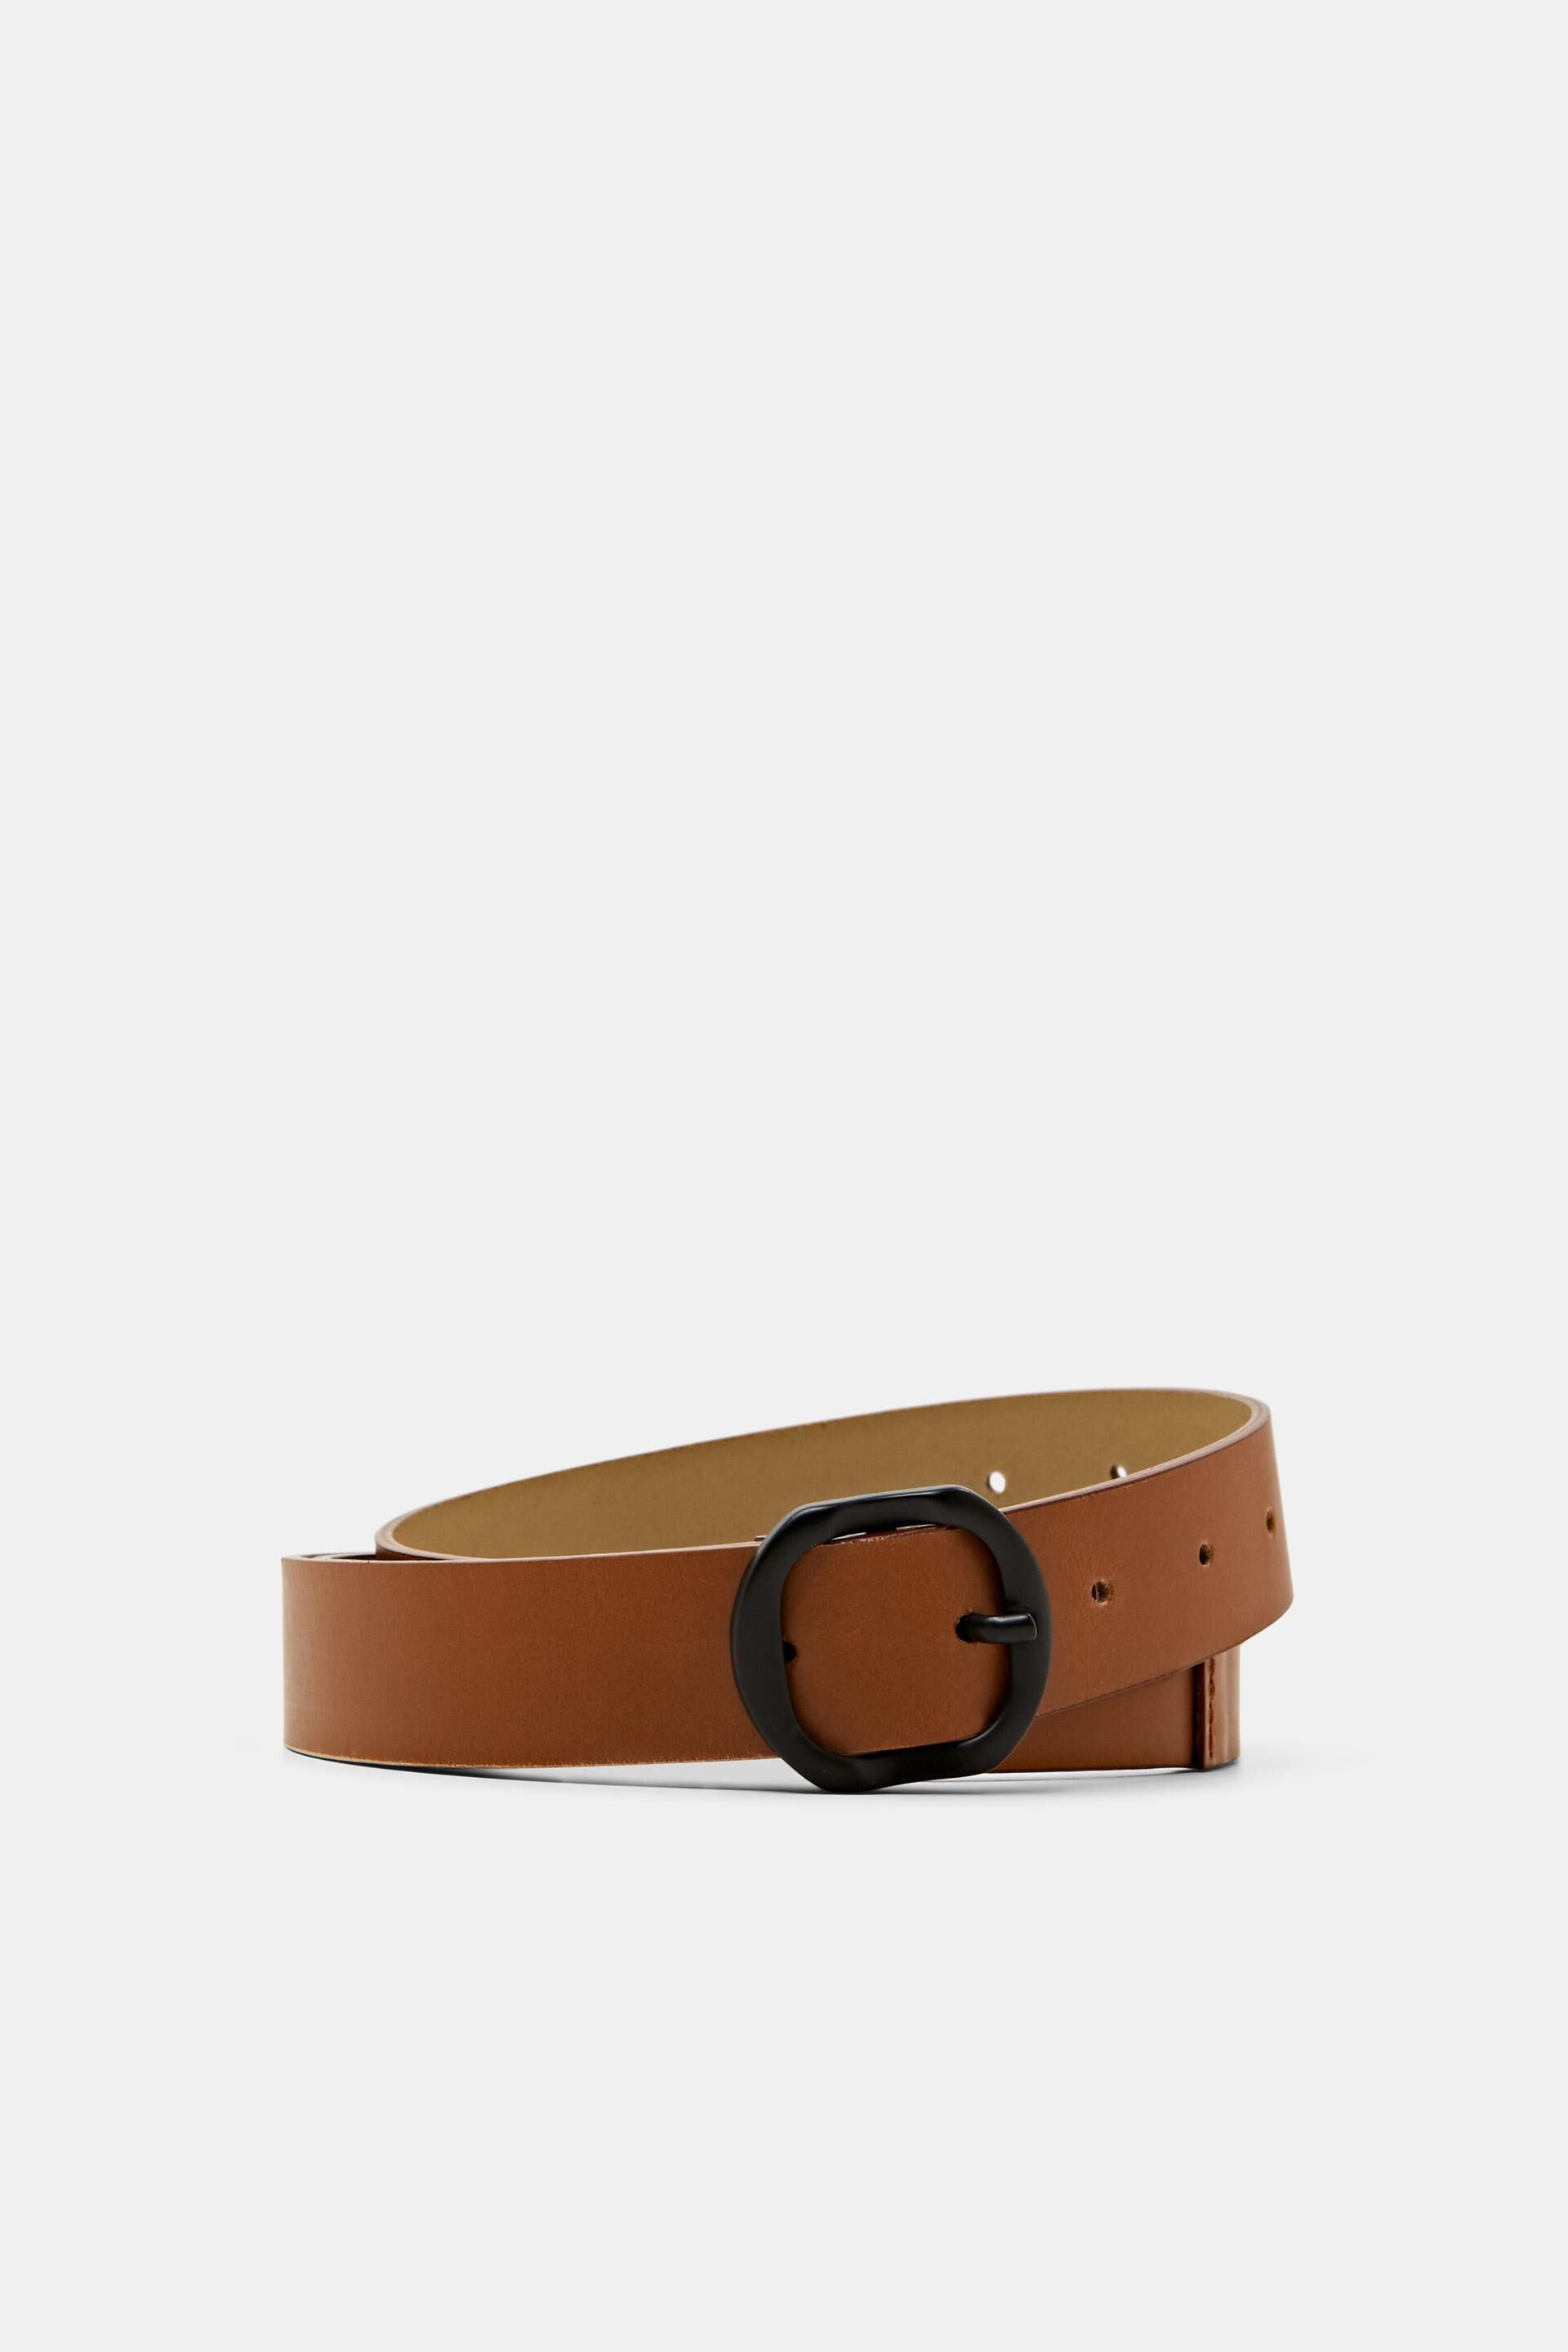 Esprit Online Store Leather Belt